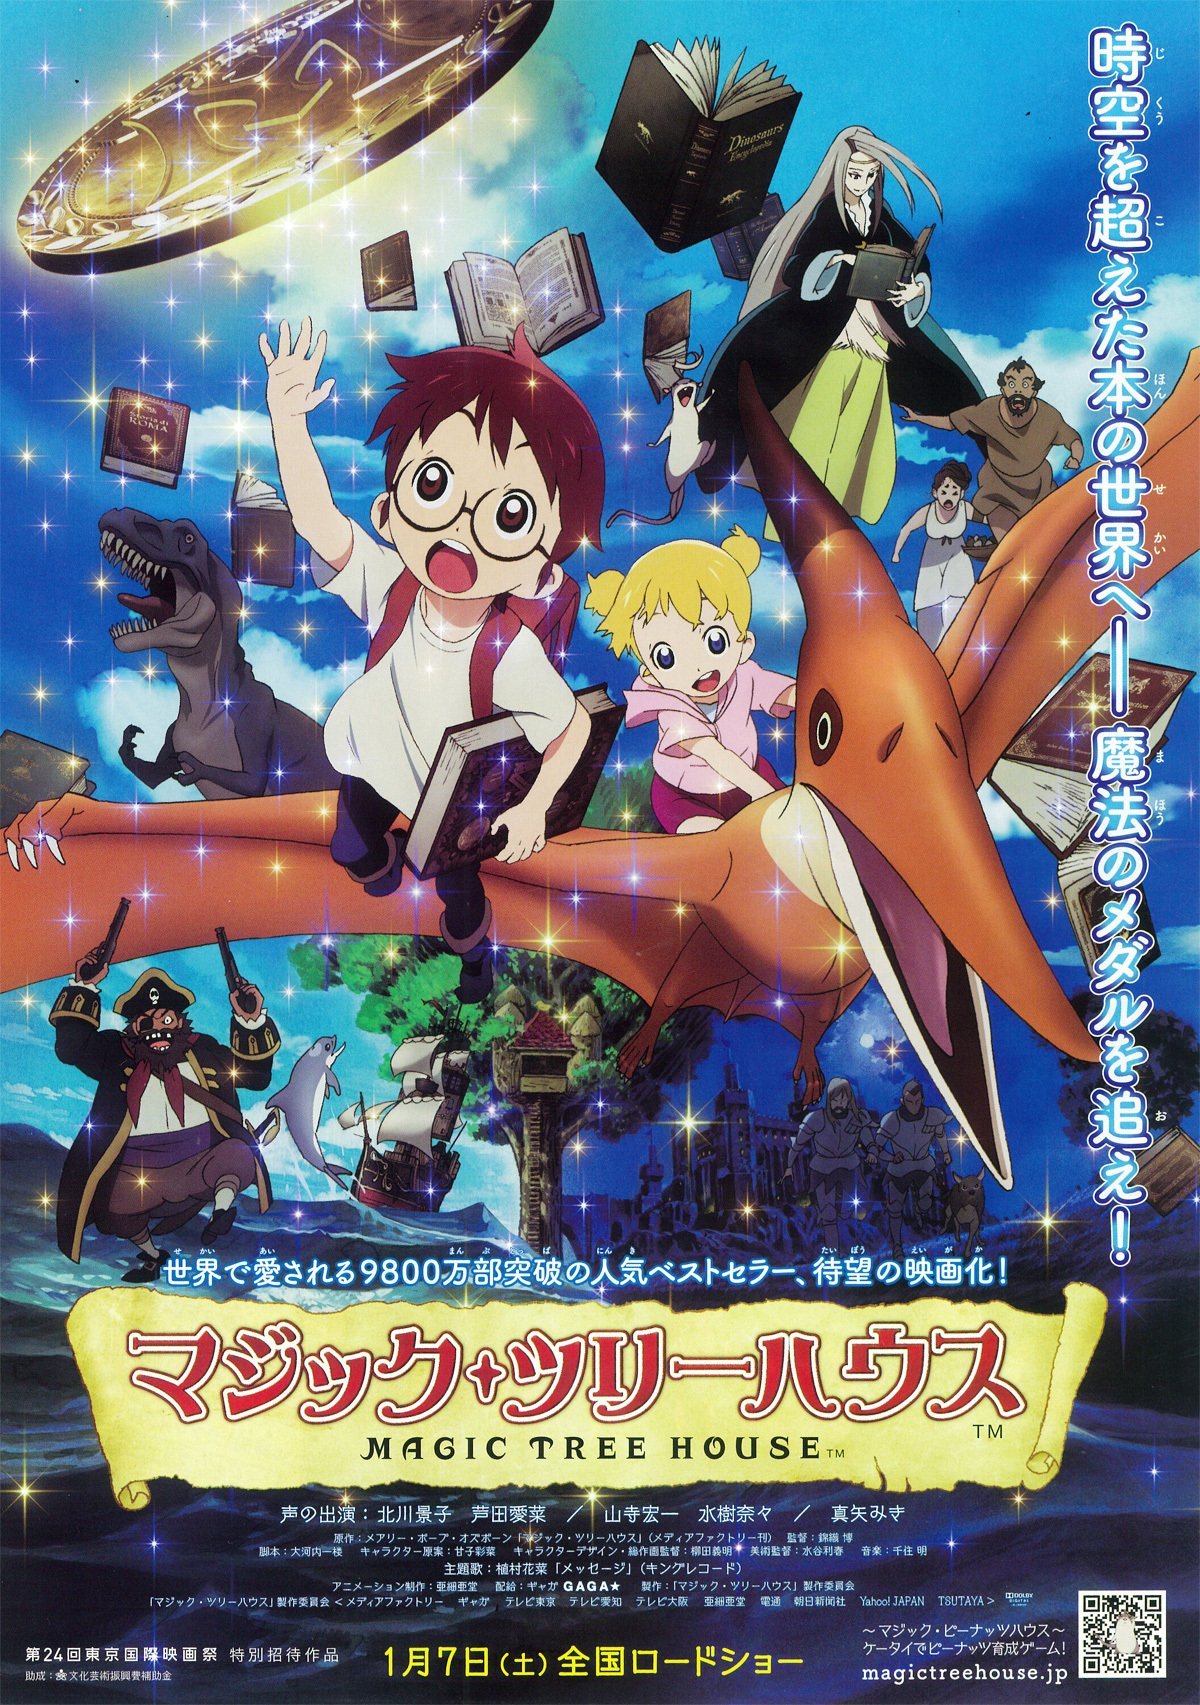 Amazoncom Animation  Magic Tree House Japan DVD ZMBZ8045  Movies  TV